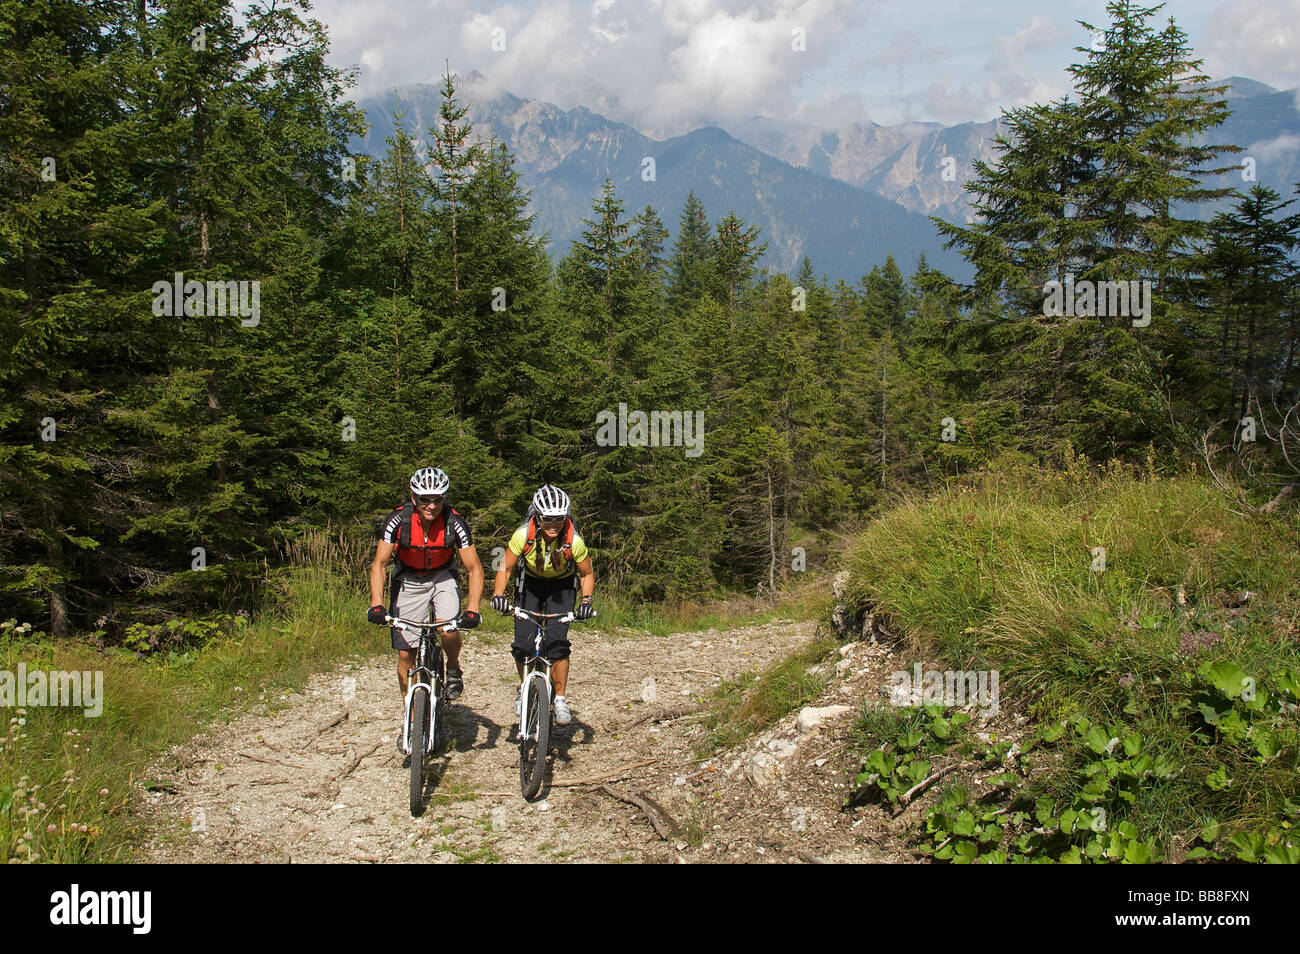 Male and female mountainbike riders northwest of Hochtoerlehuette Mountain, Ehrwald, Tyrol, Austria, Europe Stock Photo